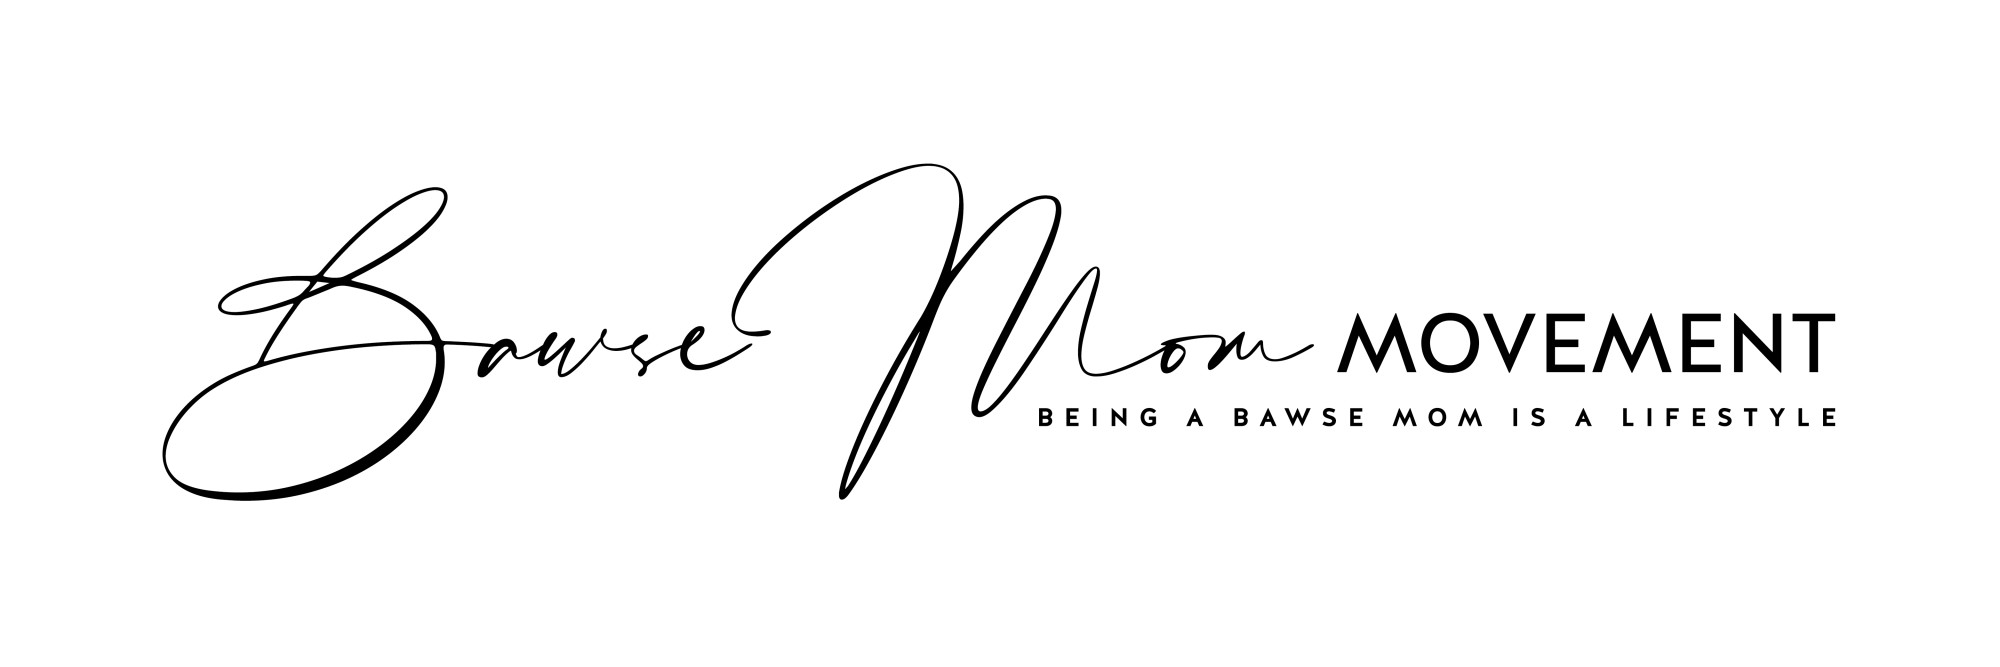 The Bawse Mom Movement